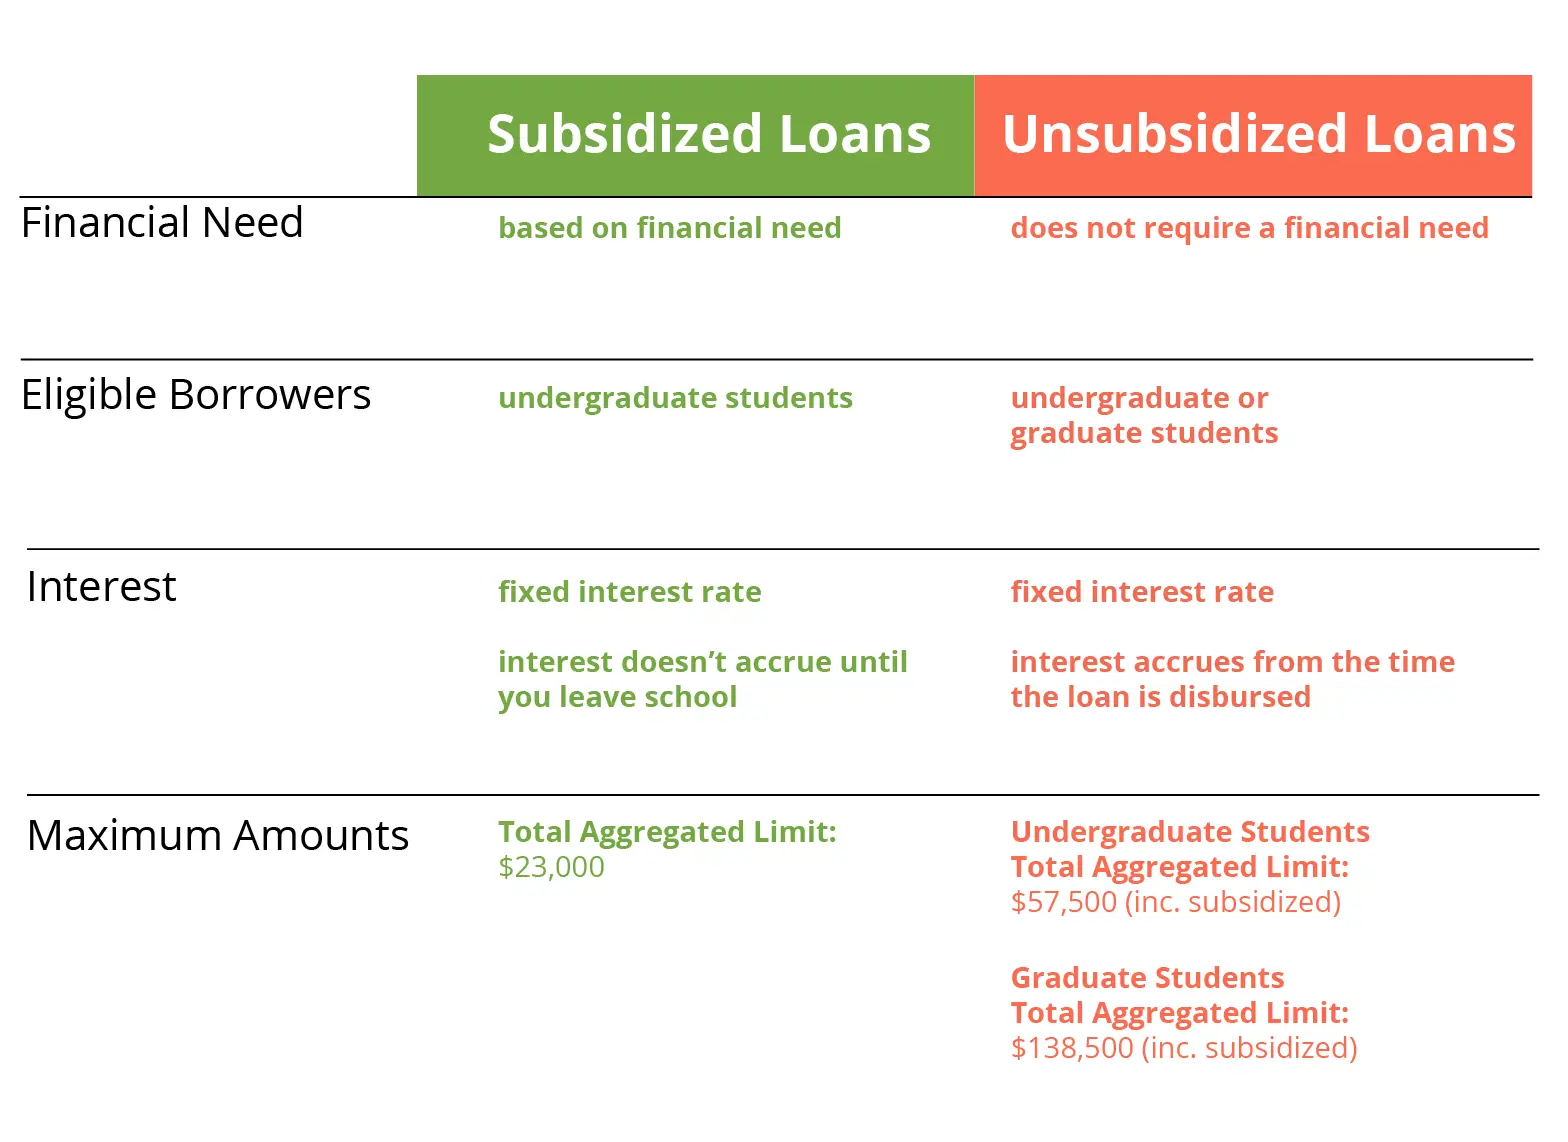 Subsidized Student Loans vs. Unsubsidized Student Loans